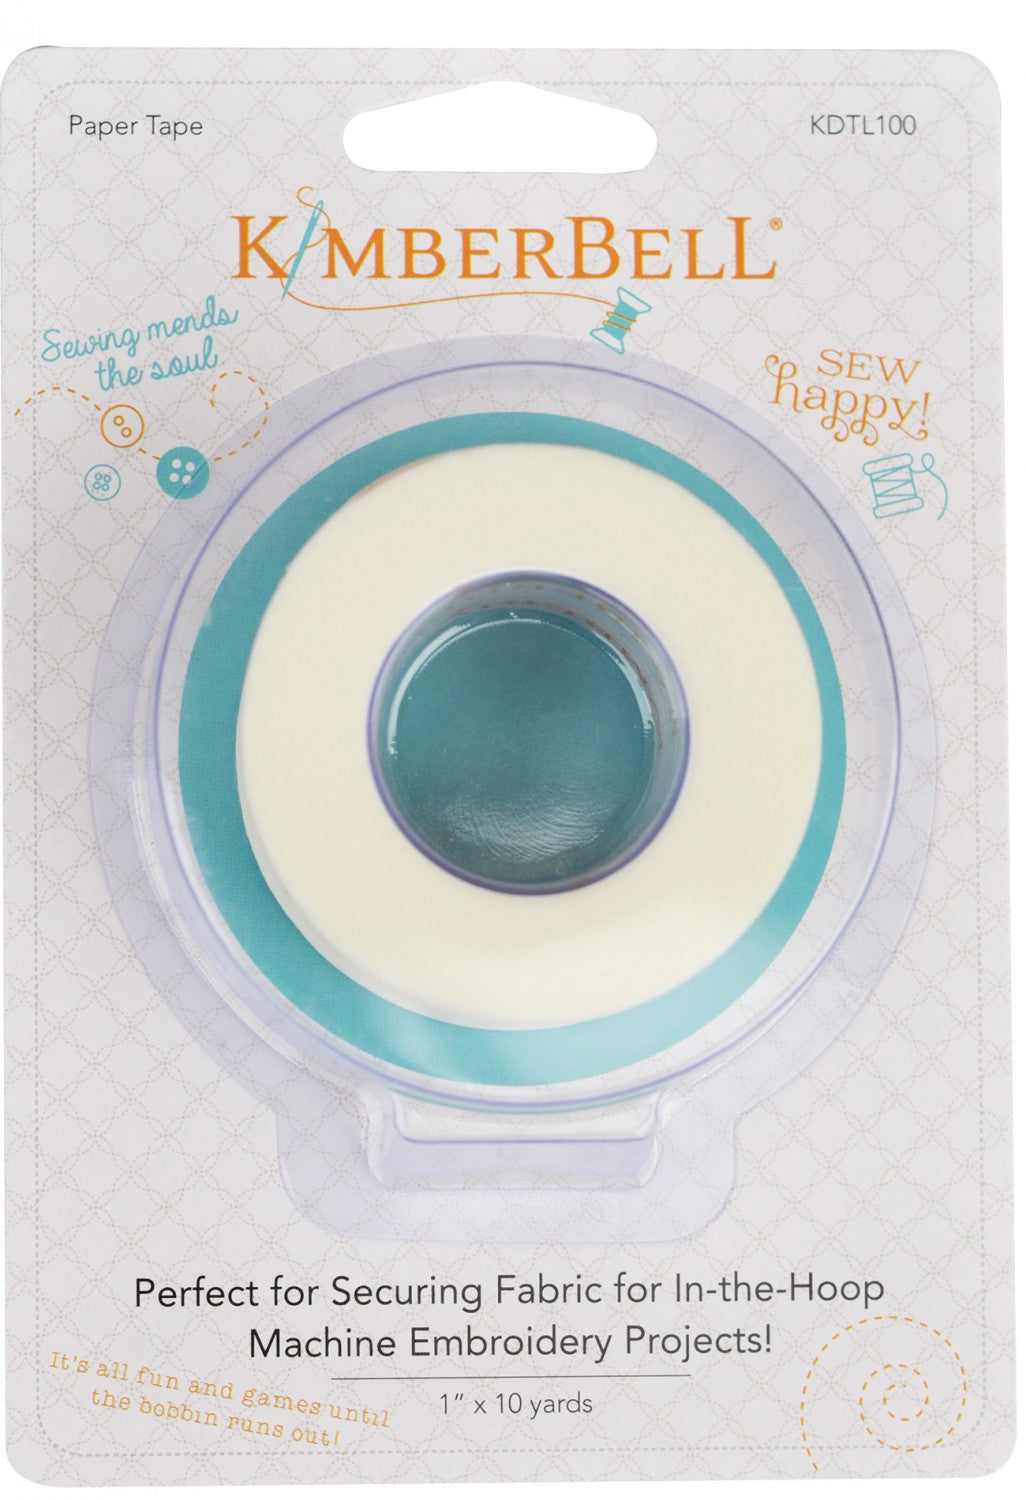 Kimberbell - paper tape